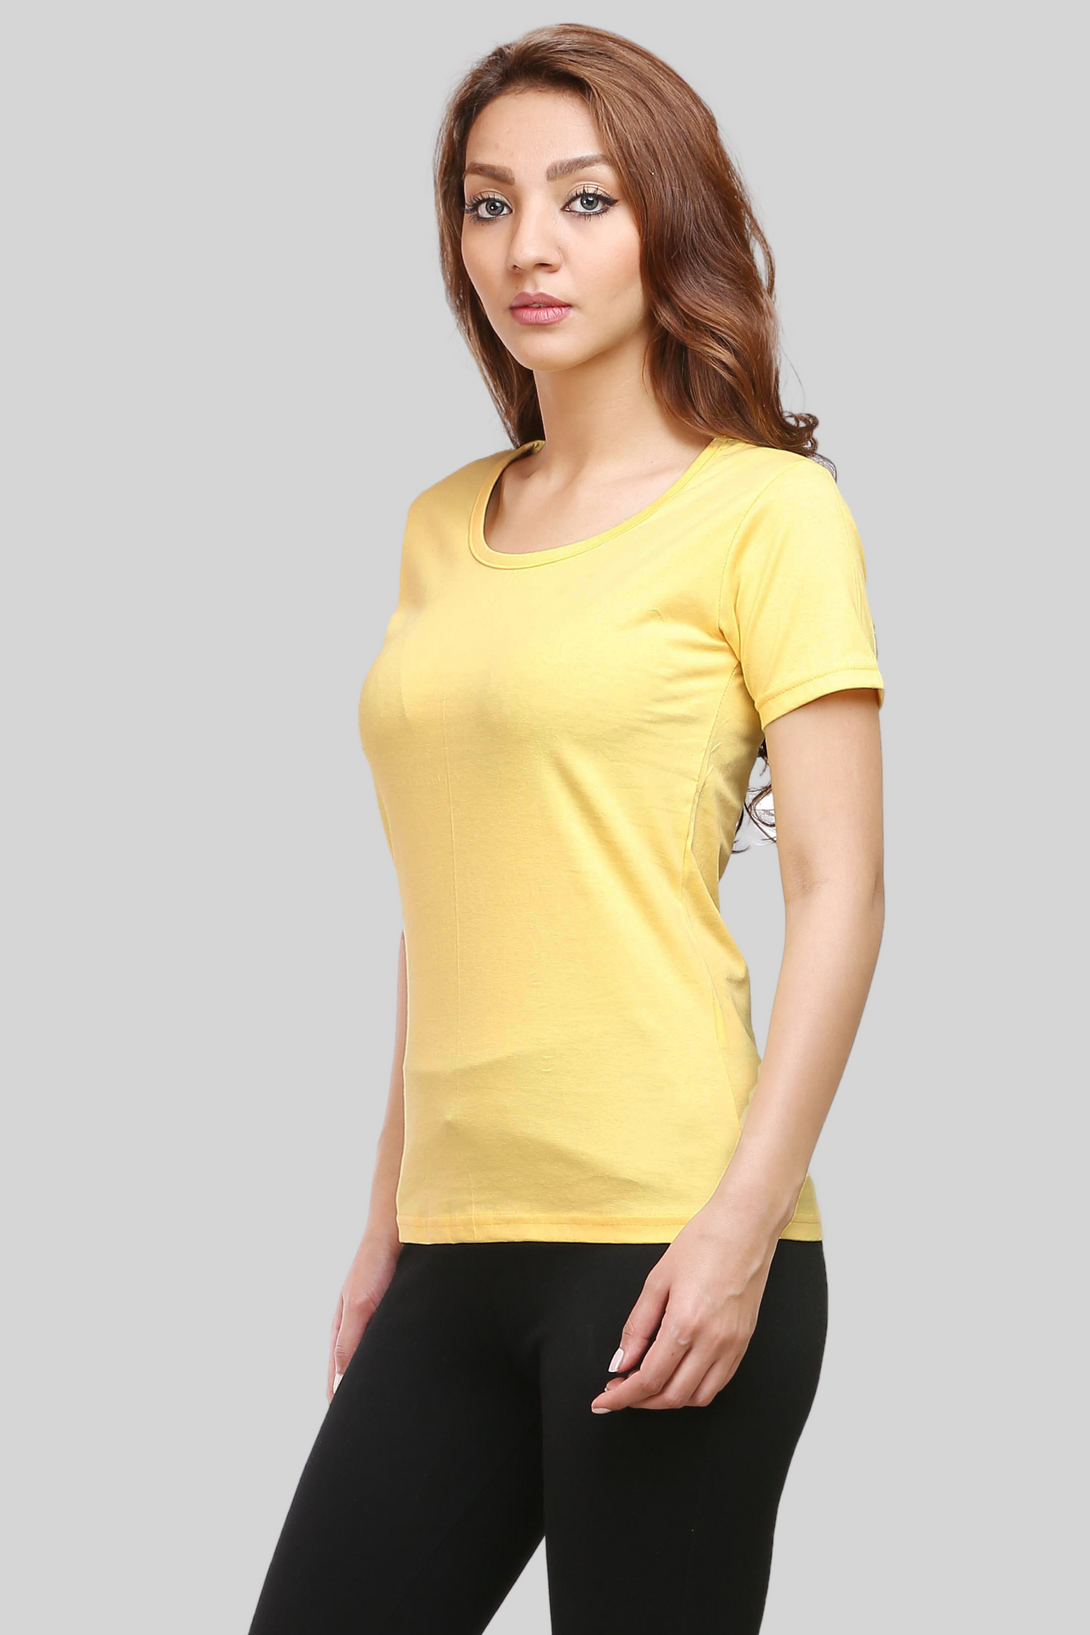 Yellow Scoop Neck T-Shirt For Women - WowWaves